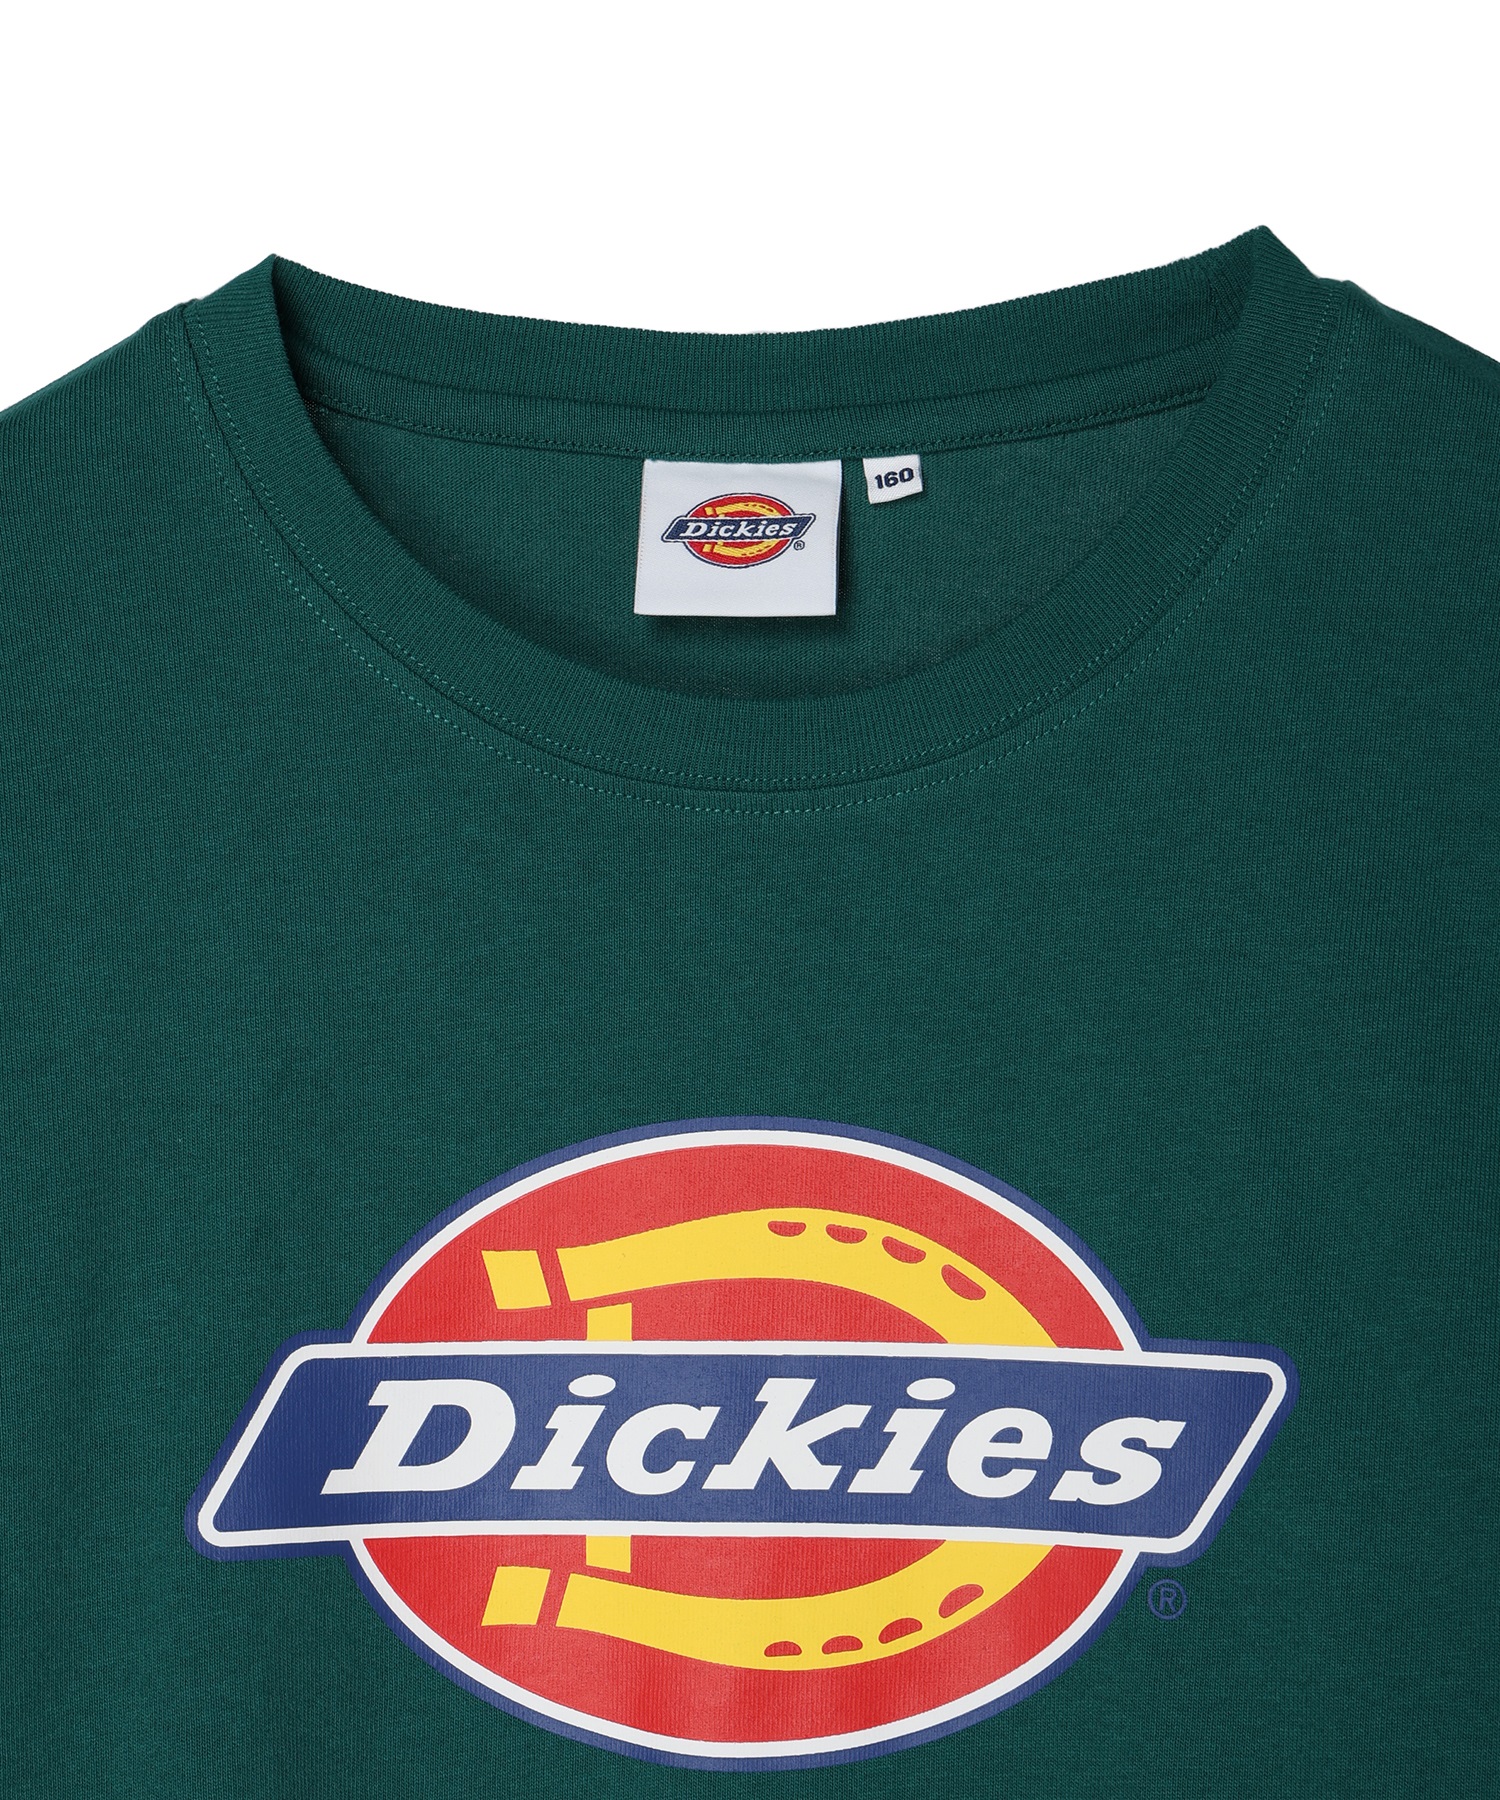 Dickies ディッキーズ LOGO LTD 80256900 キッズ 長袖Tシャツ(01WT-130)